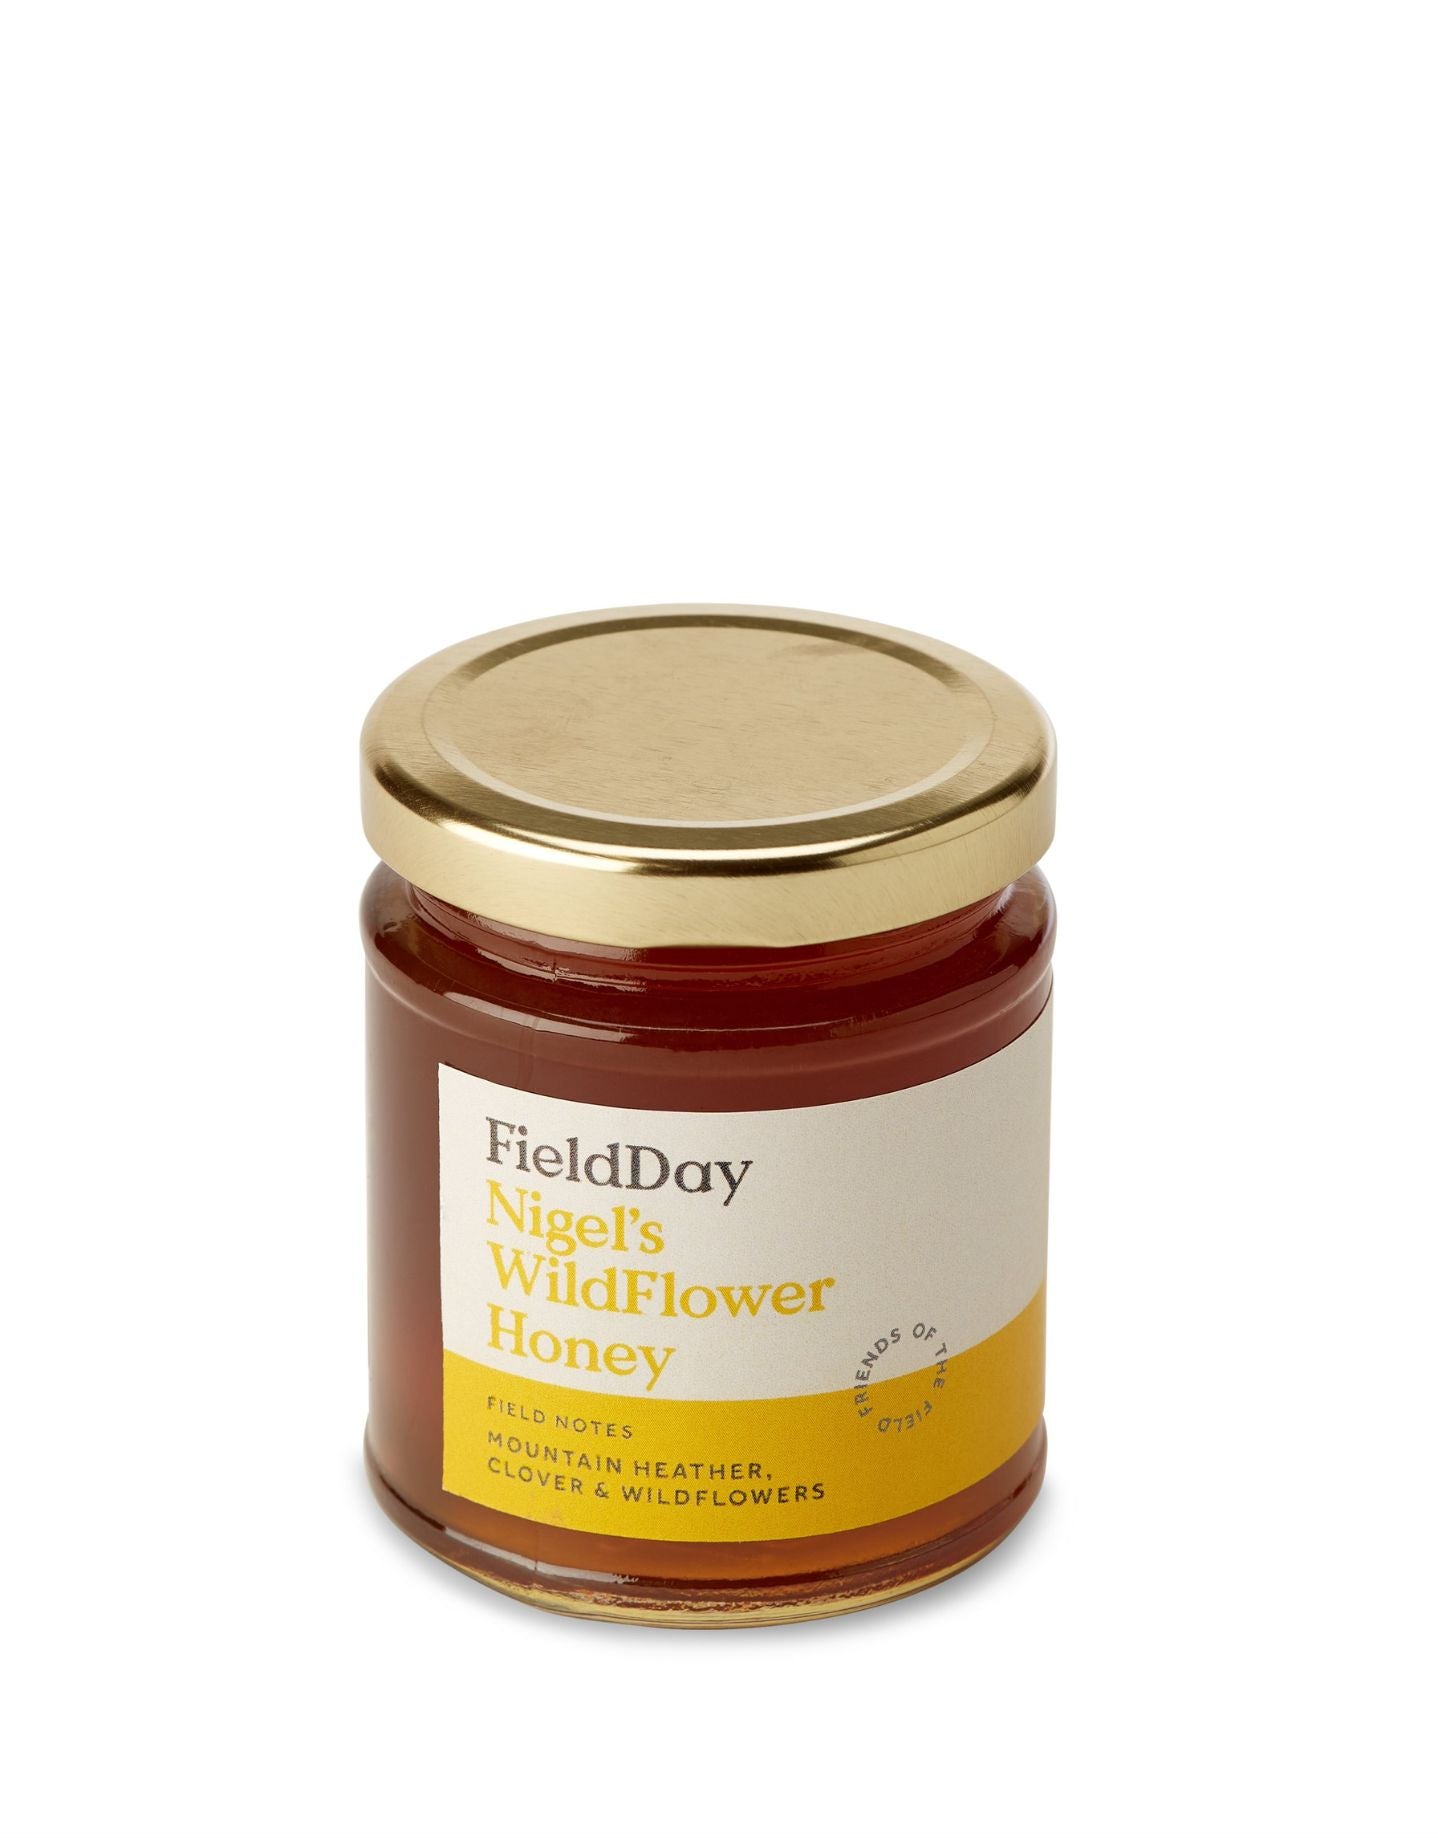 Nigel's Wildflower Honey